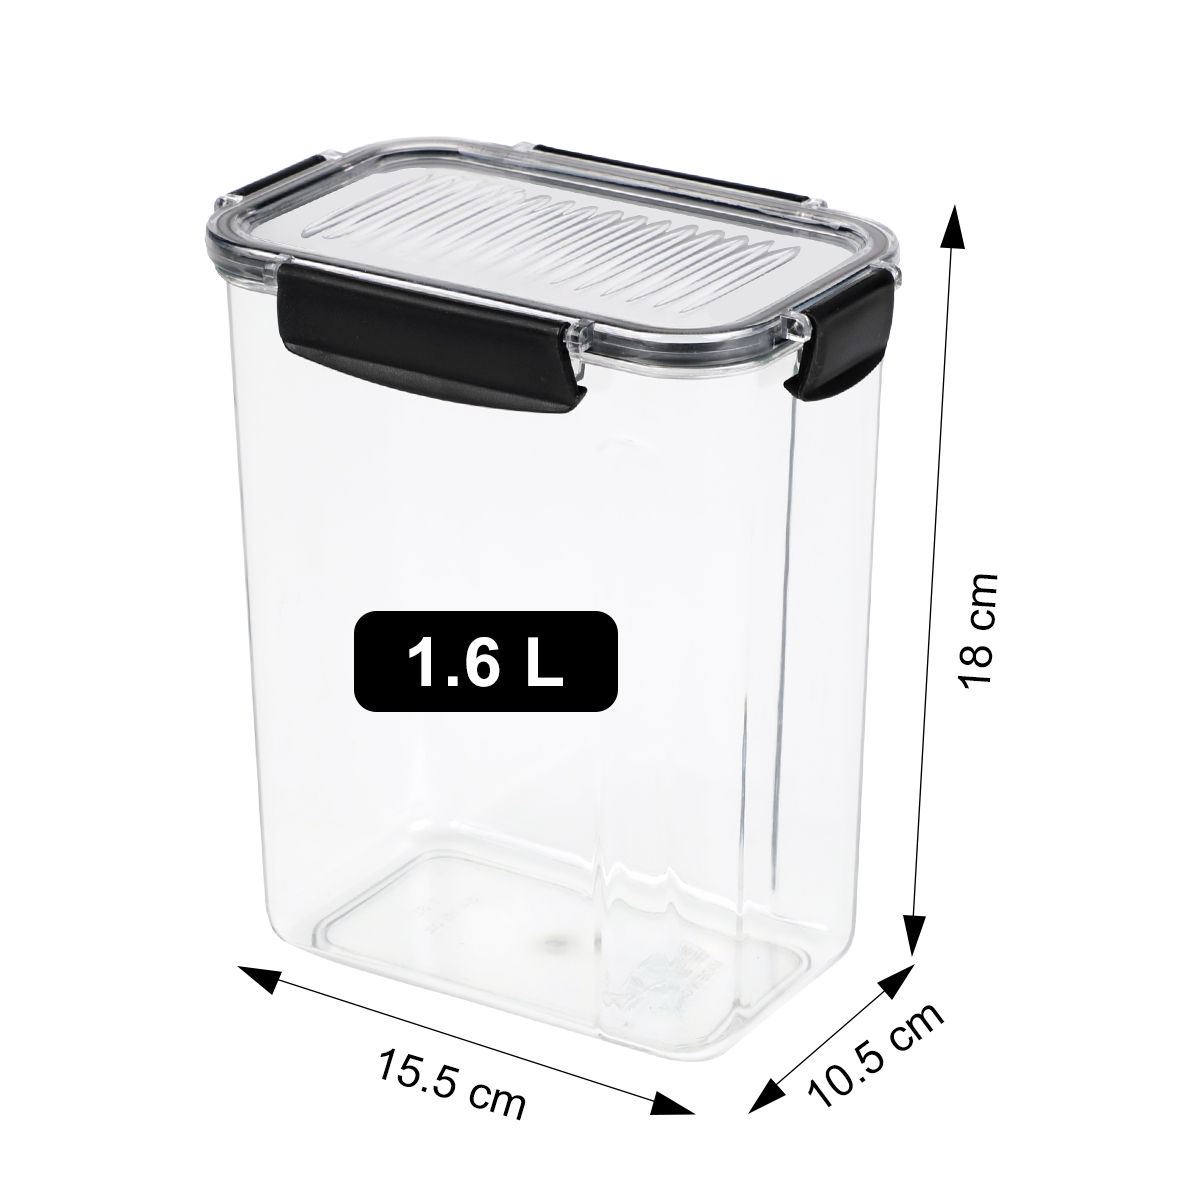 1.6L Plastic Airtight Food ContainerEasy-Lock Lids